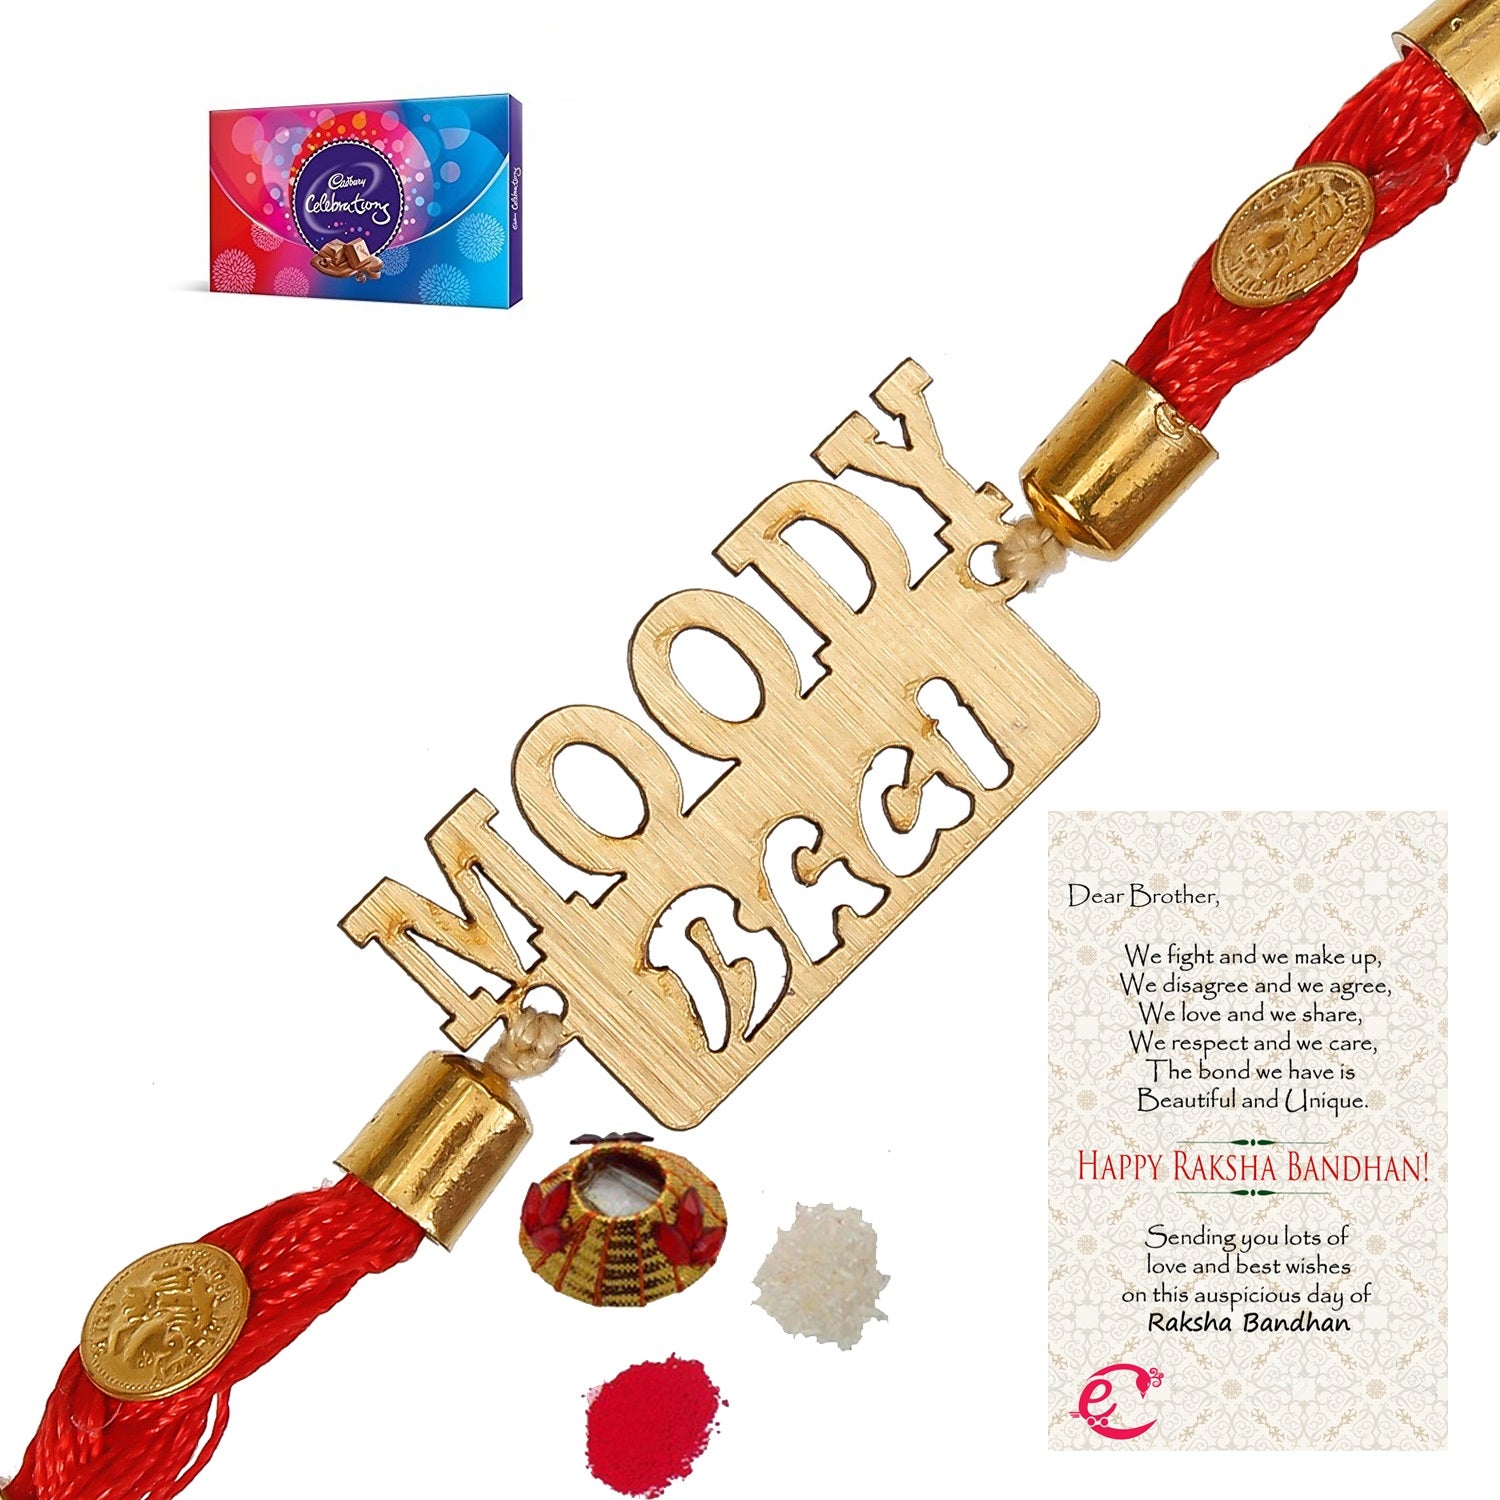 Designer Wooden Moddy Bhai Rakhi with Cadbury Celebrations Gift Pack of 7 Assorted Chocolates and Roli Tikka Matki, Best Wishes Greeting Card